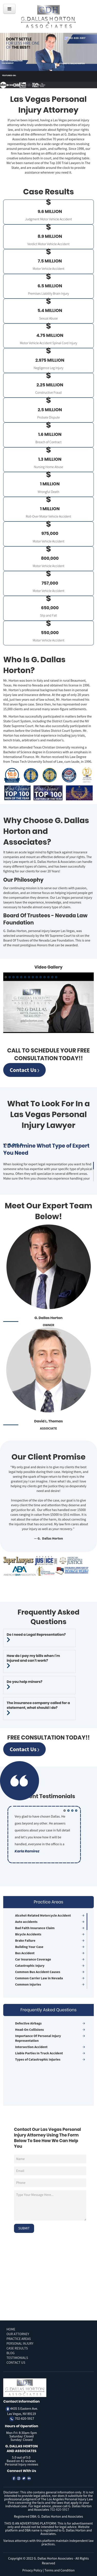 G. Dallas Horton and Associates - Las Vegas NV Lawyers